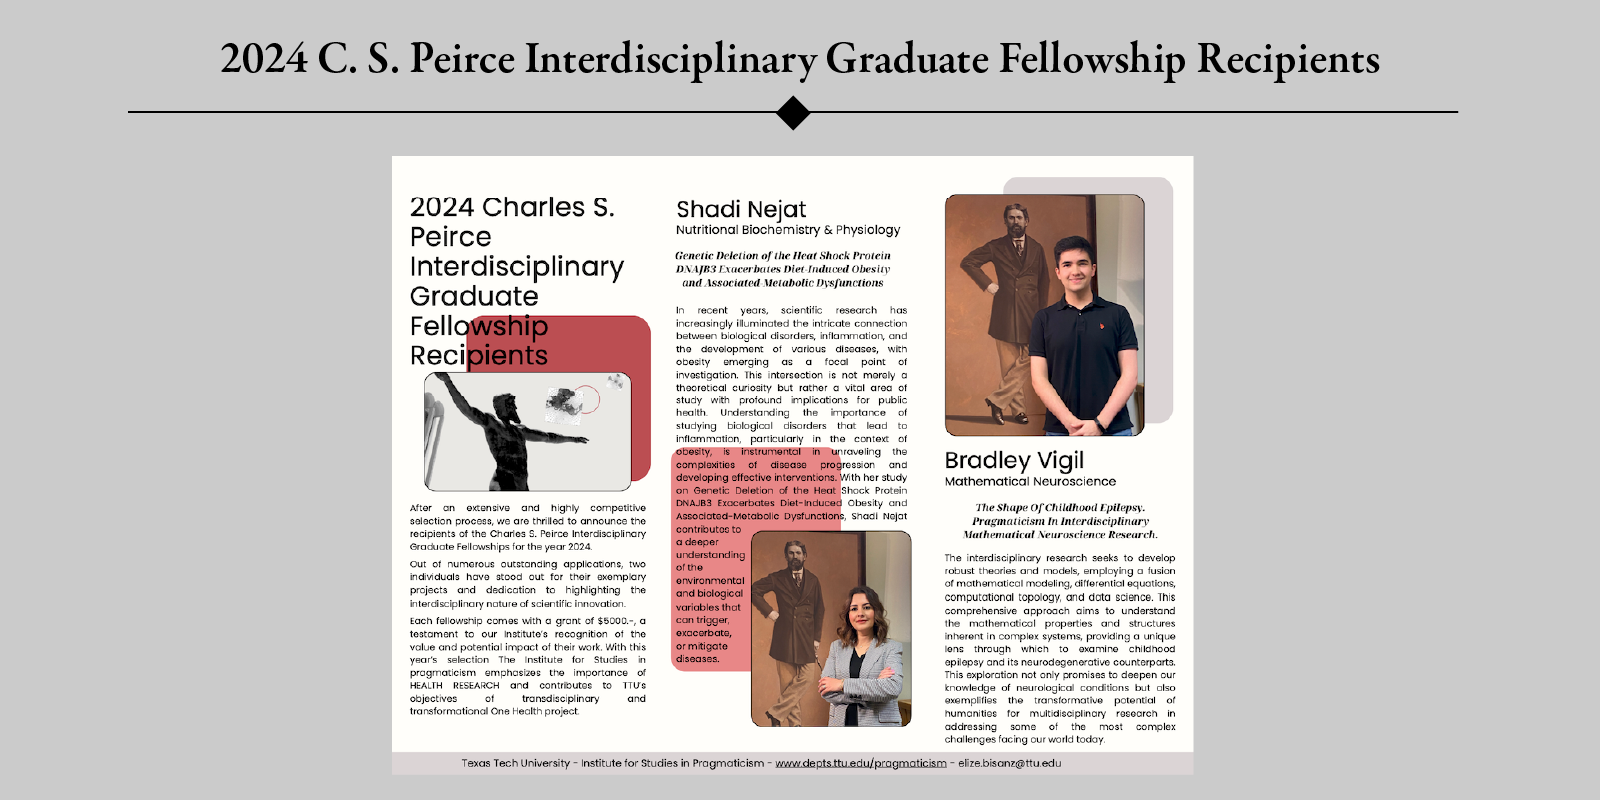 2024 CSP Interdisciplinary Graduate Fellowship Recipients